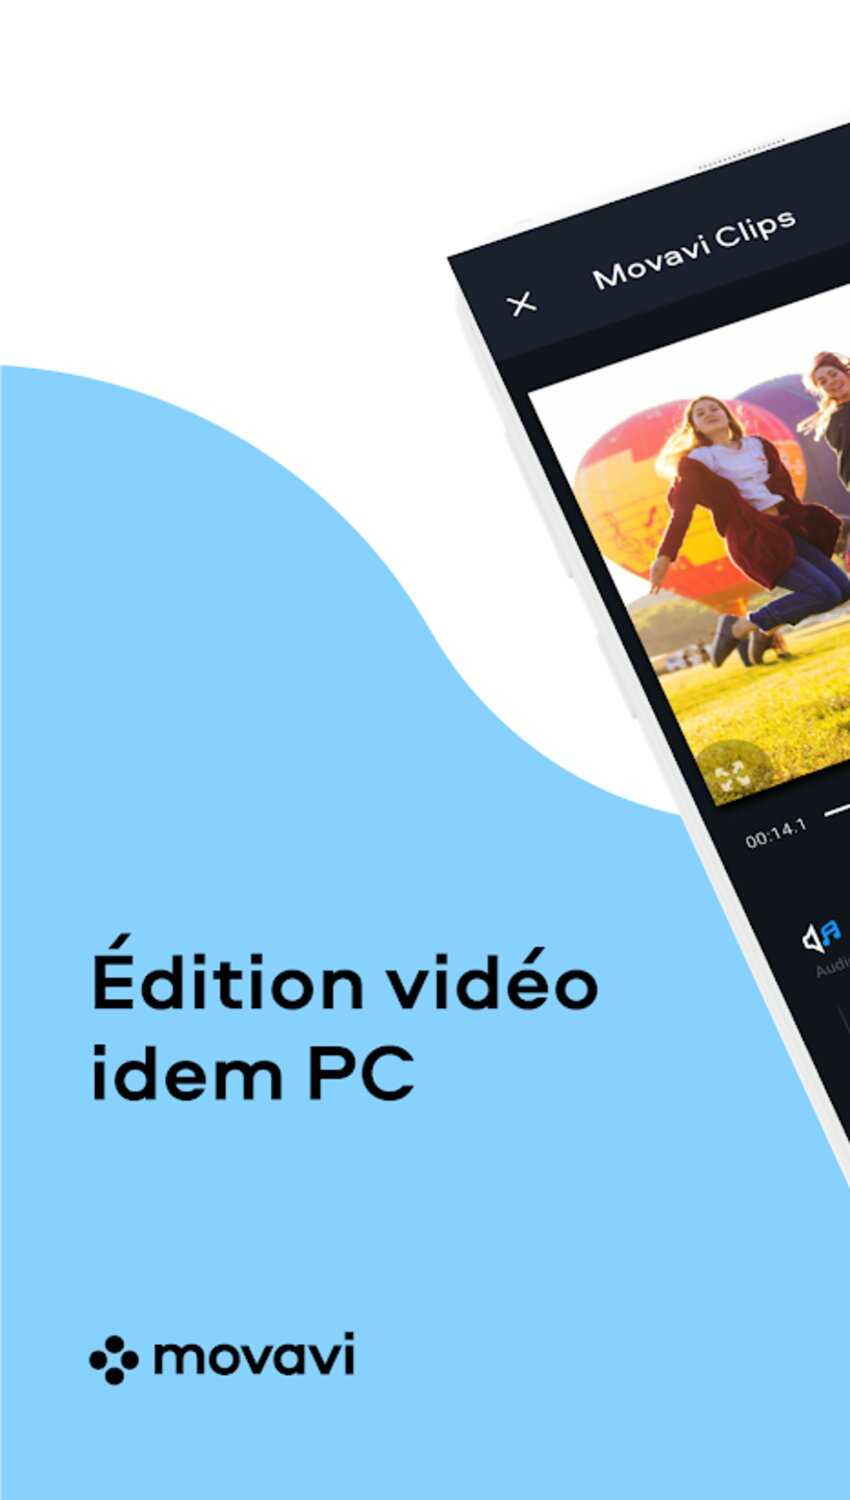 Movavi Clips – Video Editor with Slideshows v4.14.1 (Premium) APK